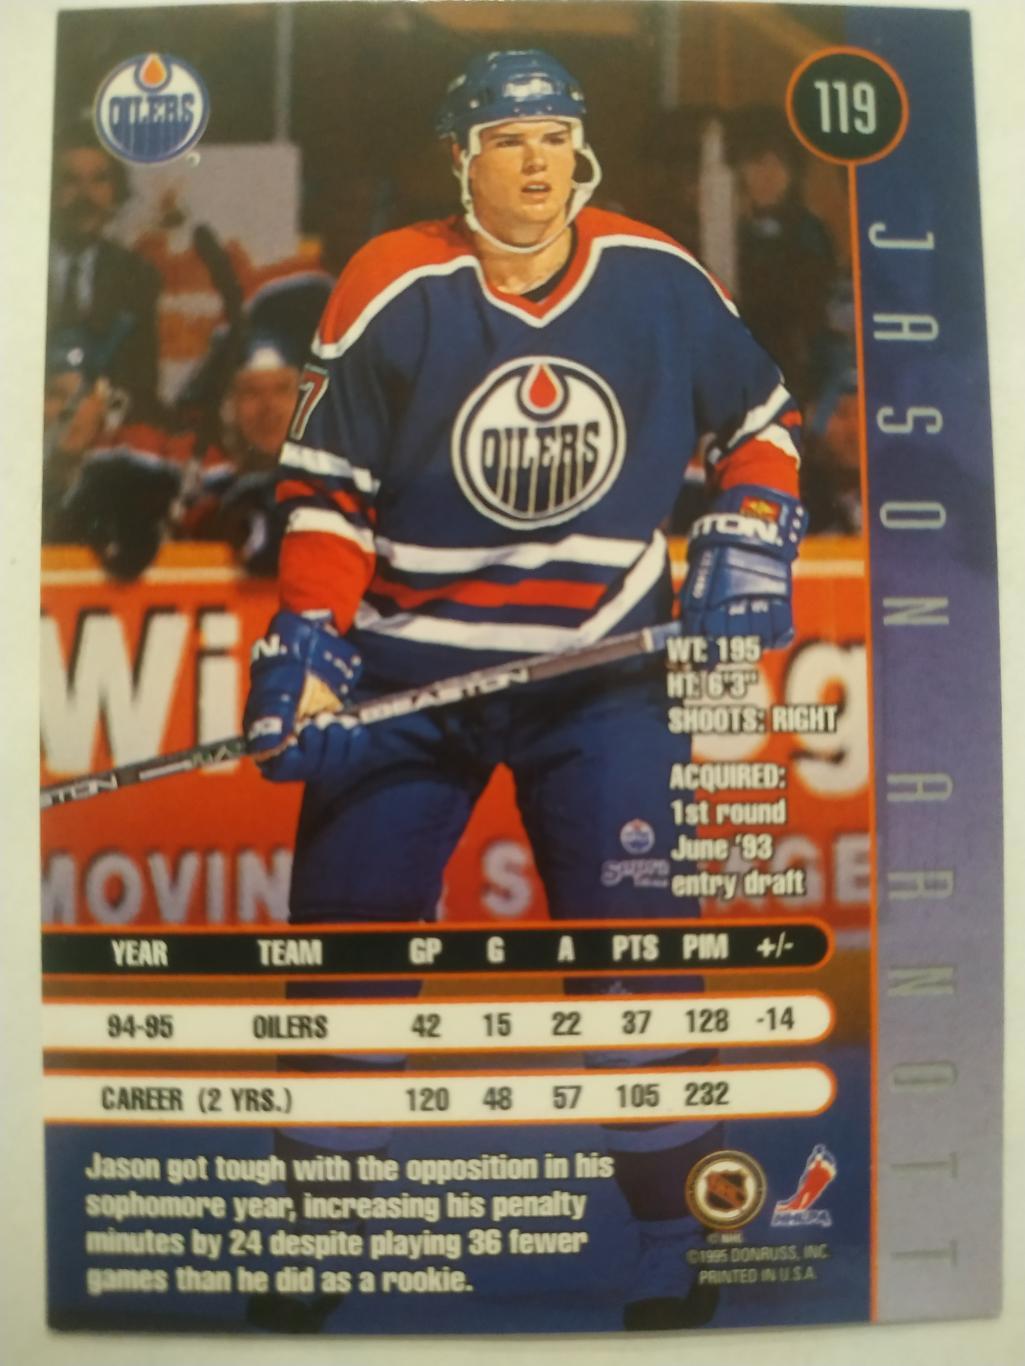 ХОККЕЙ КАРТОЧКА НХЛ DONRUSS LEAF 1995-96 JASON ARNOTT EDMONTON OILERS #119 1